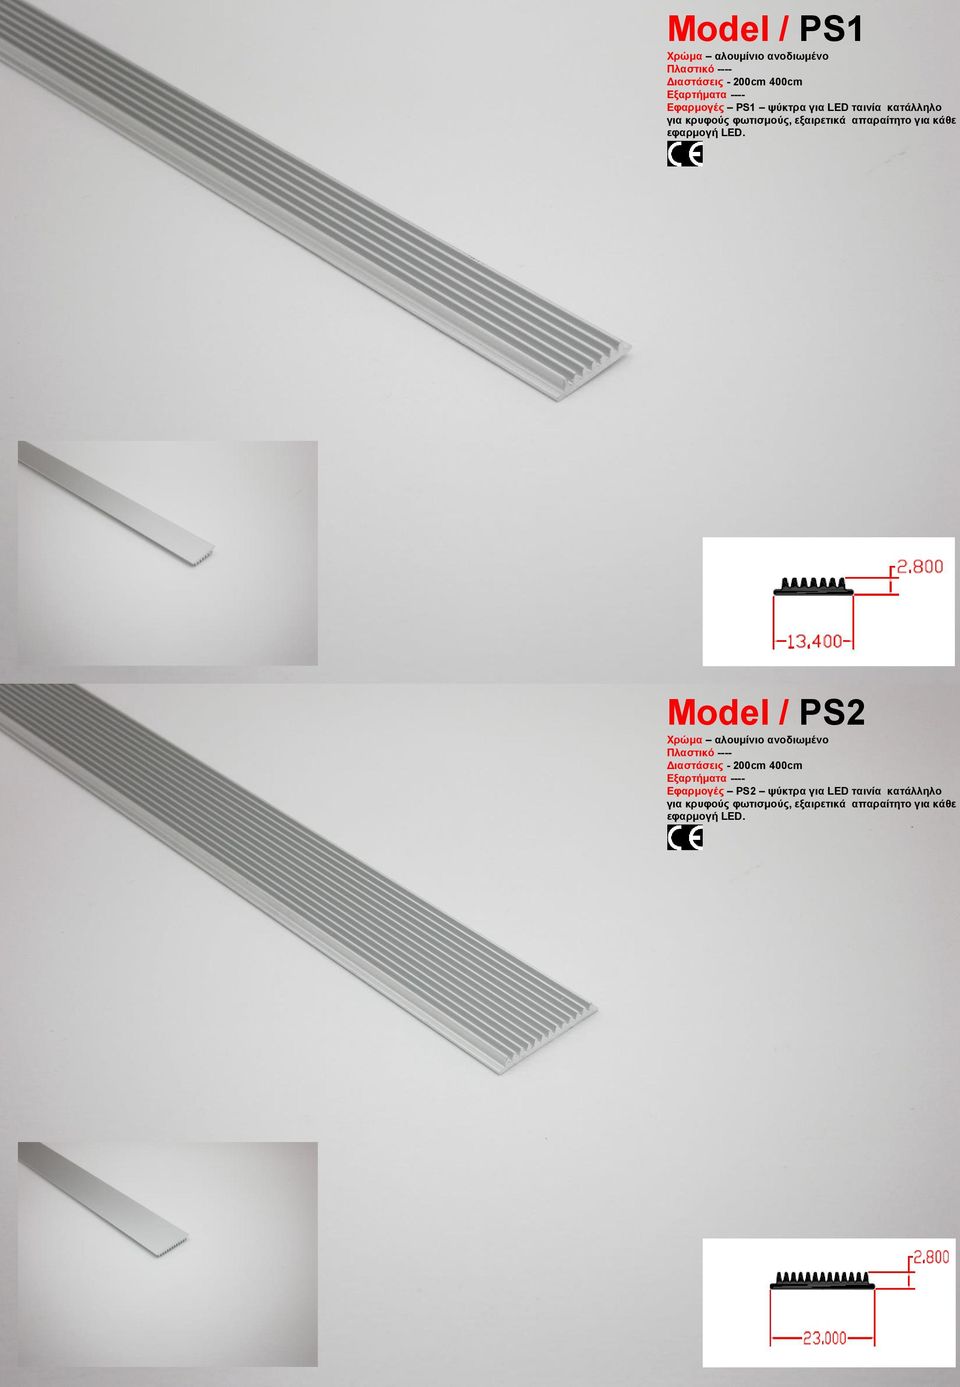 Model / PS2 Χρώμα αλουμίνιο ανοδιωμένο Πλαστικό ---- Εξαρτήματα ---- Εφαρμογές PS2 ψύκτρα